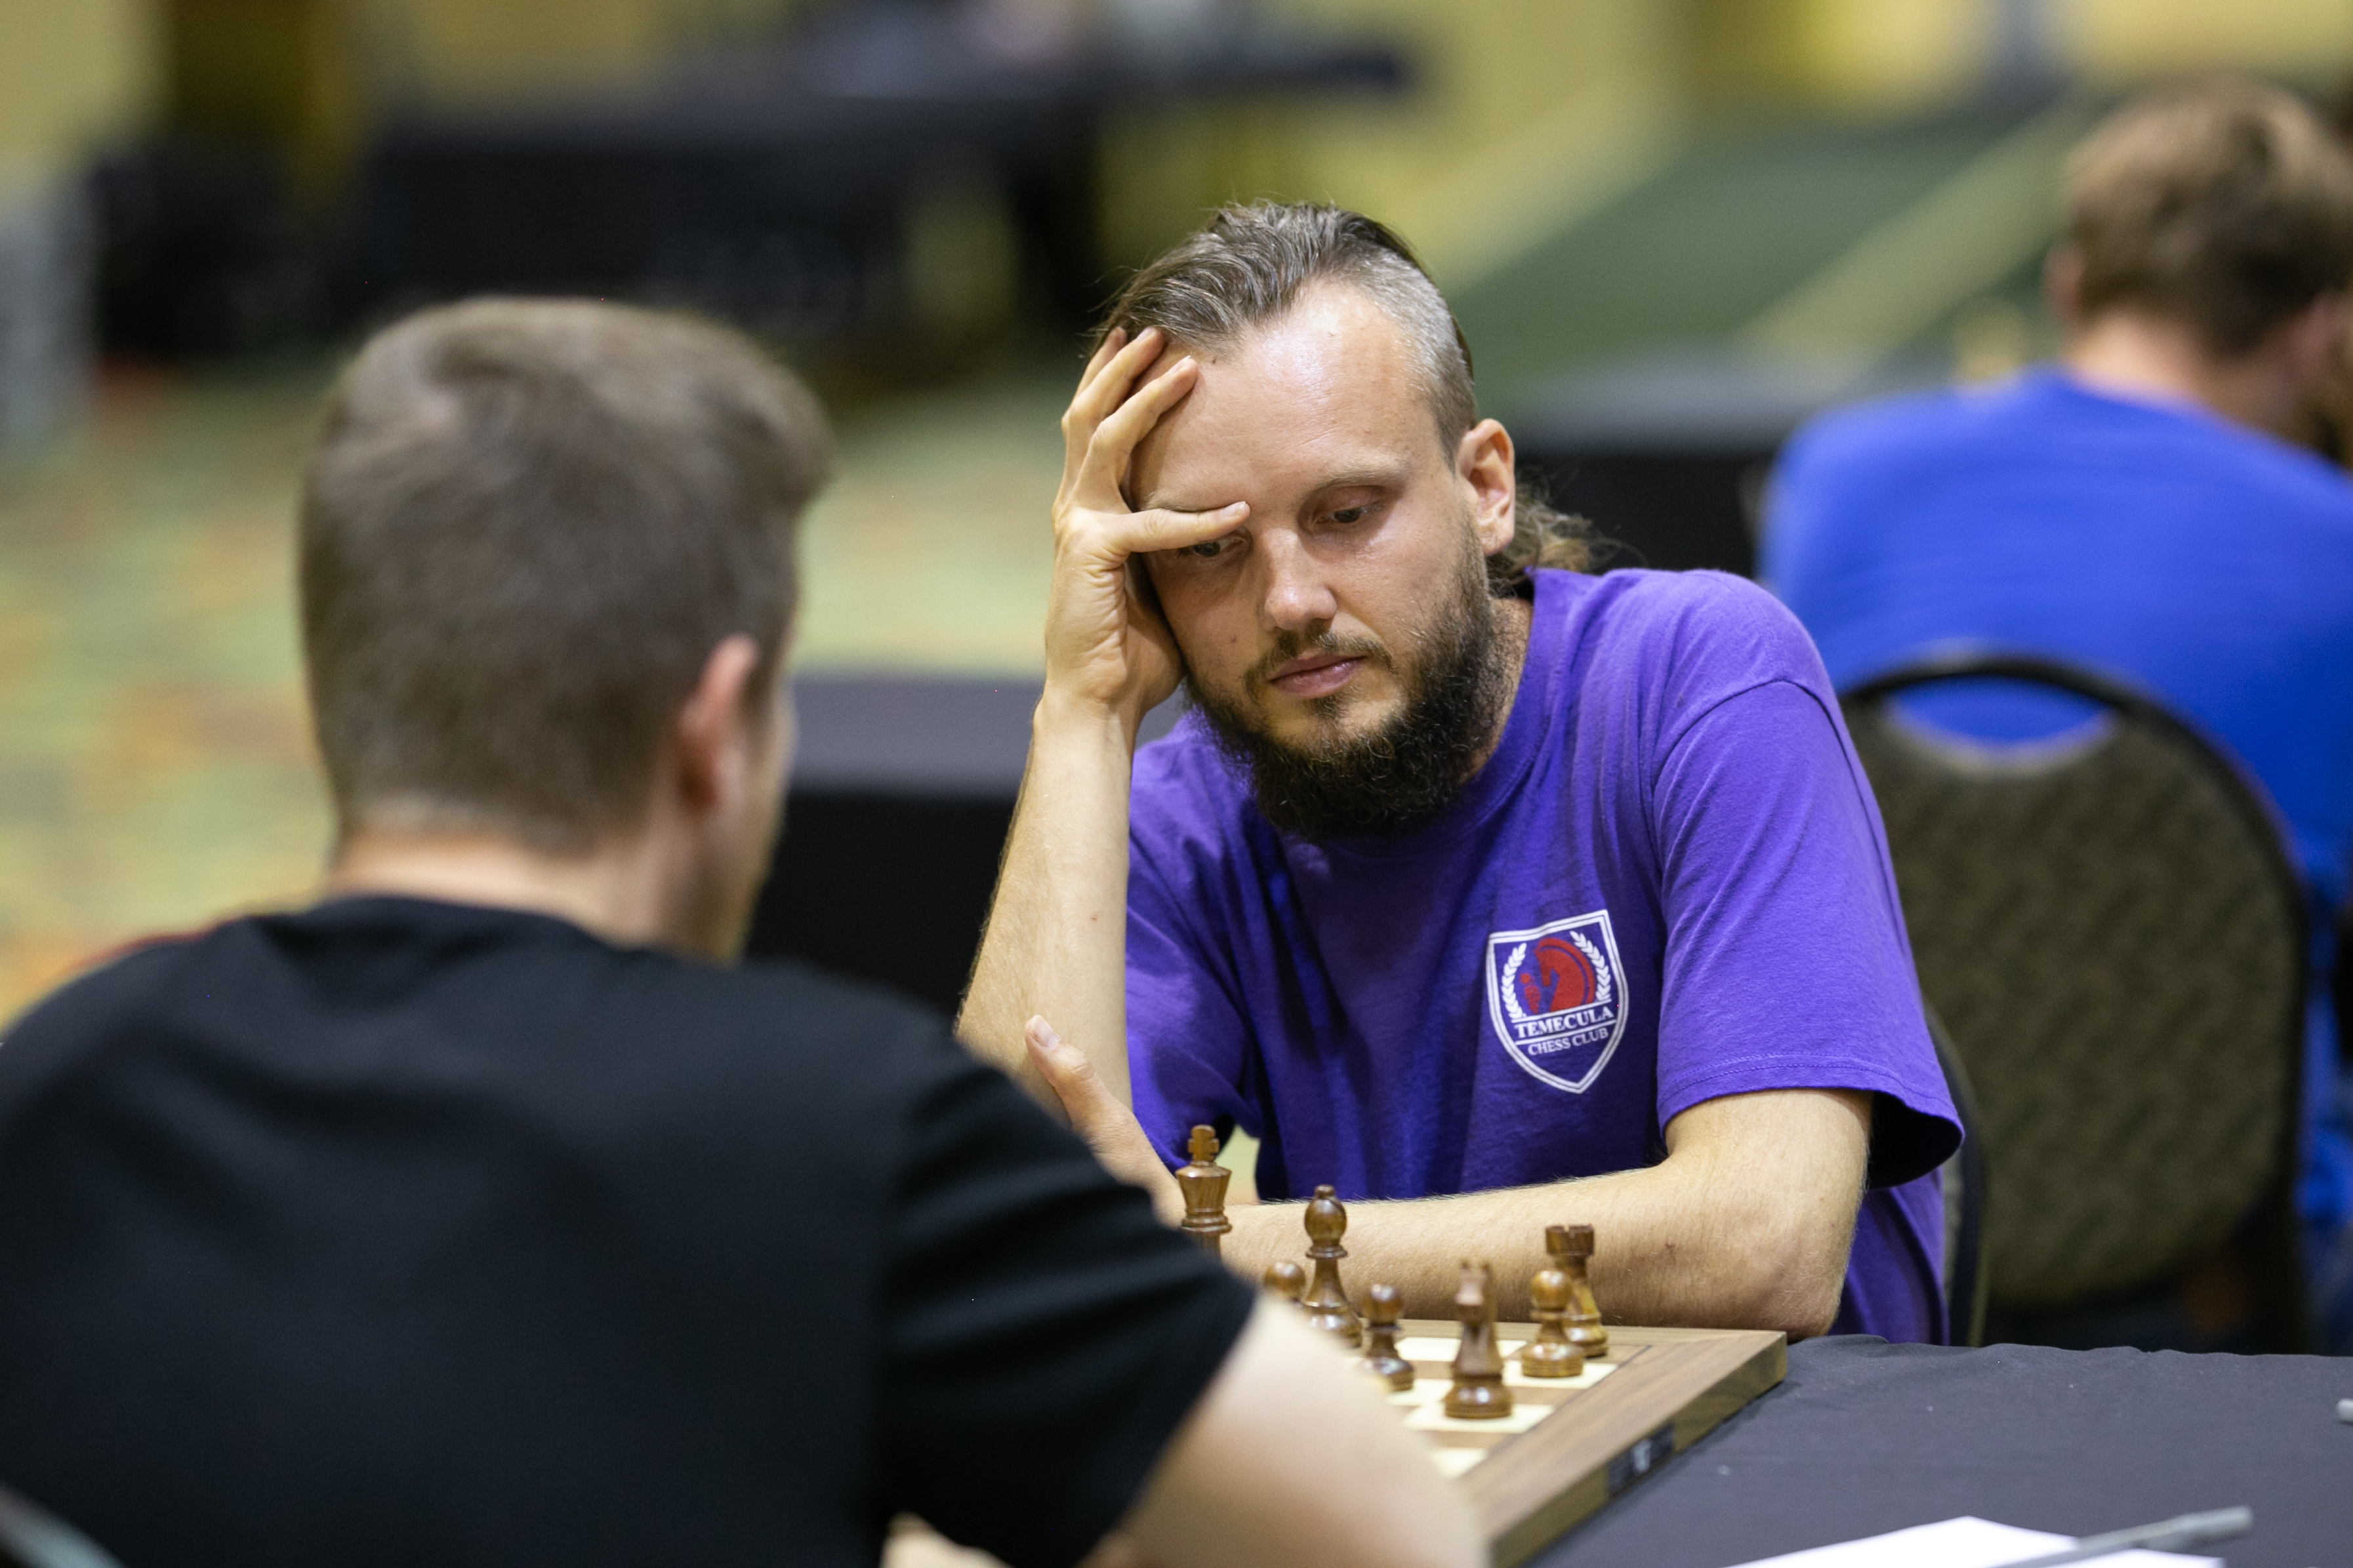 Timur Gareyev Breaks World Consecutive Blindfold Chess Record